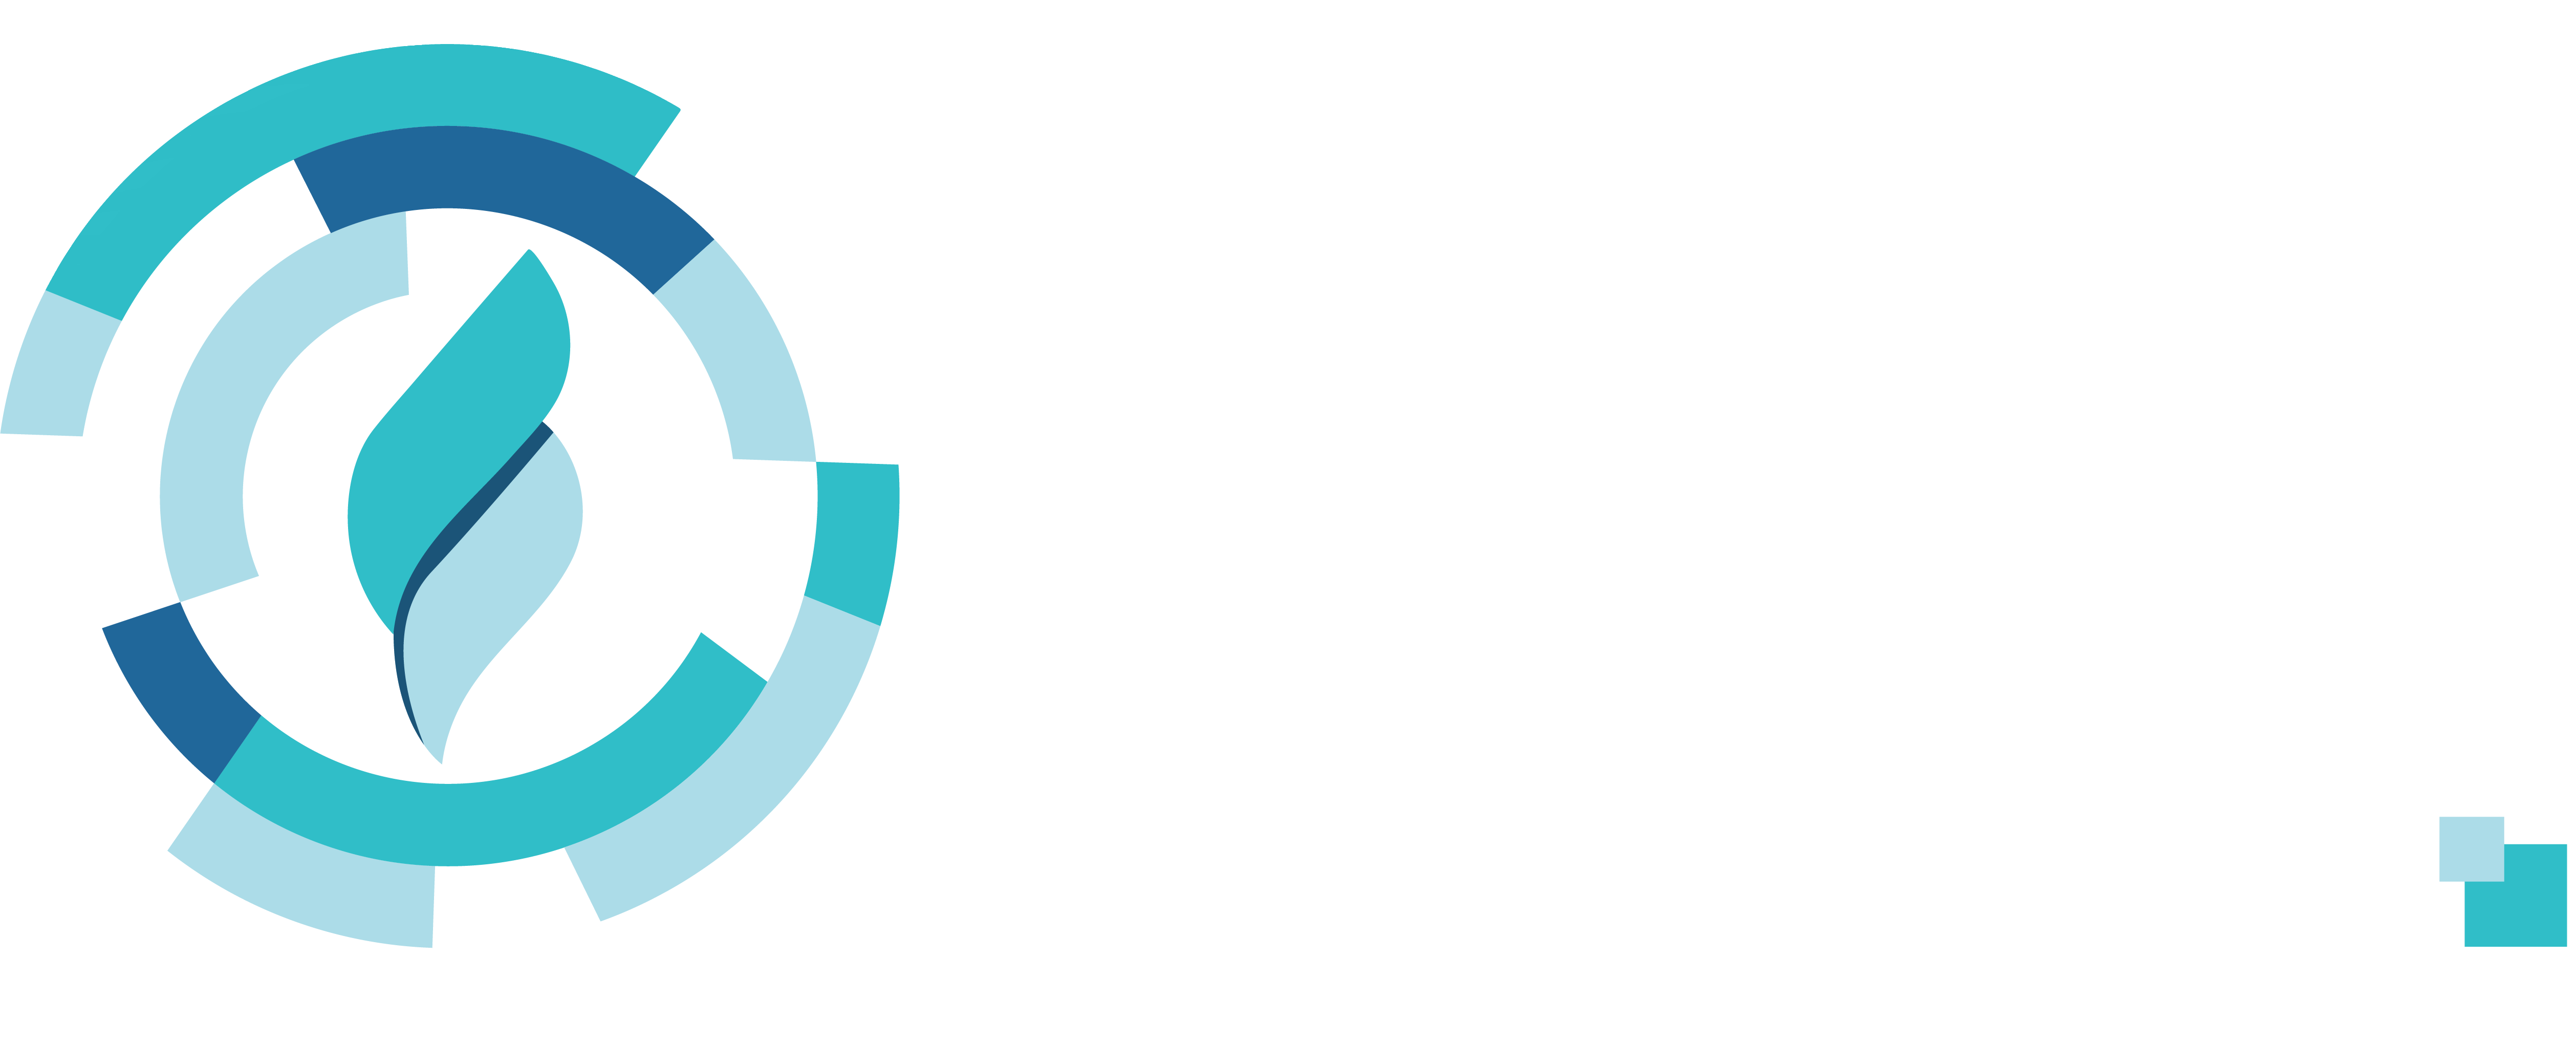 Digital's Flare